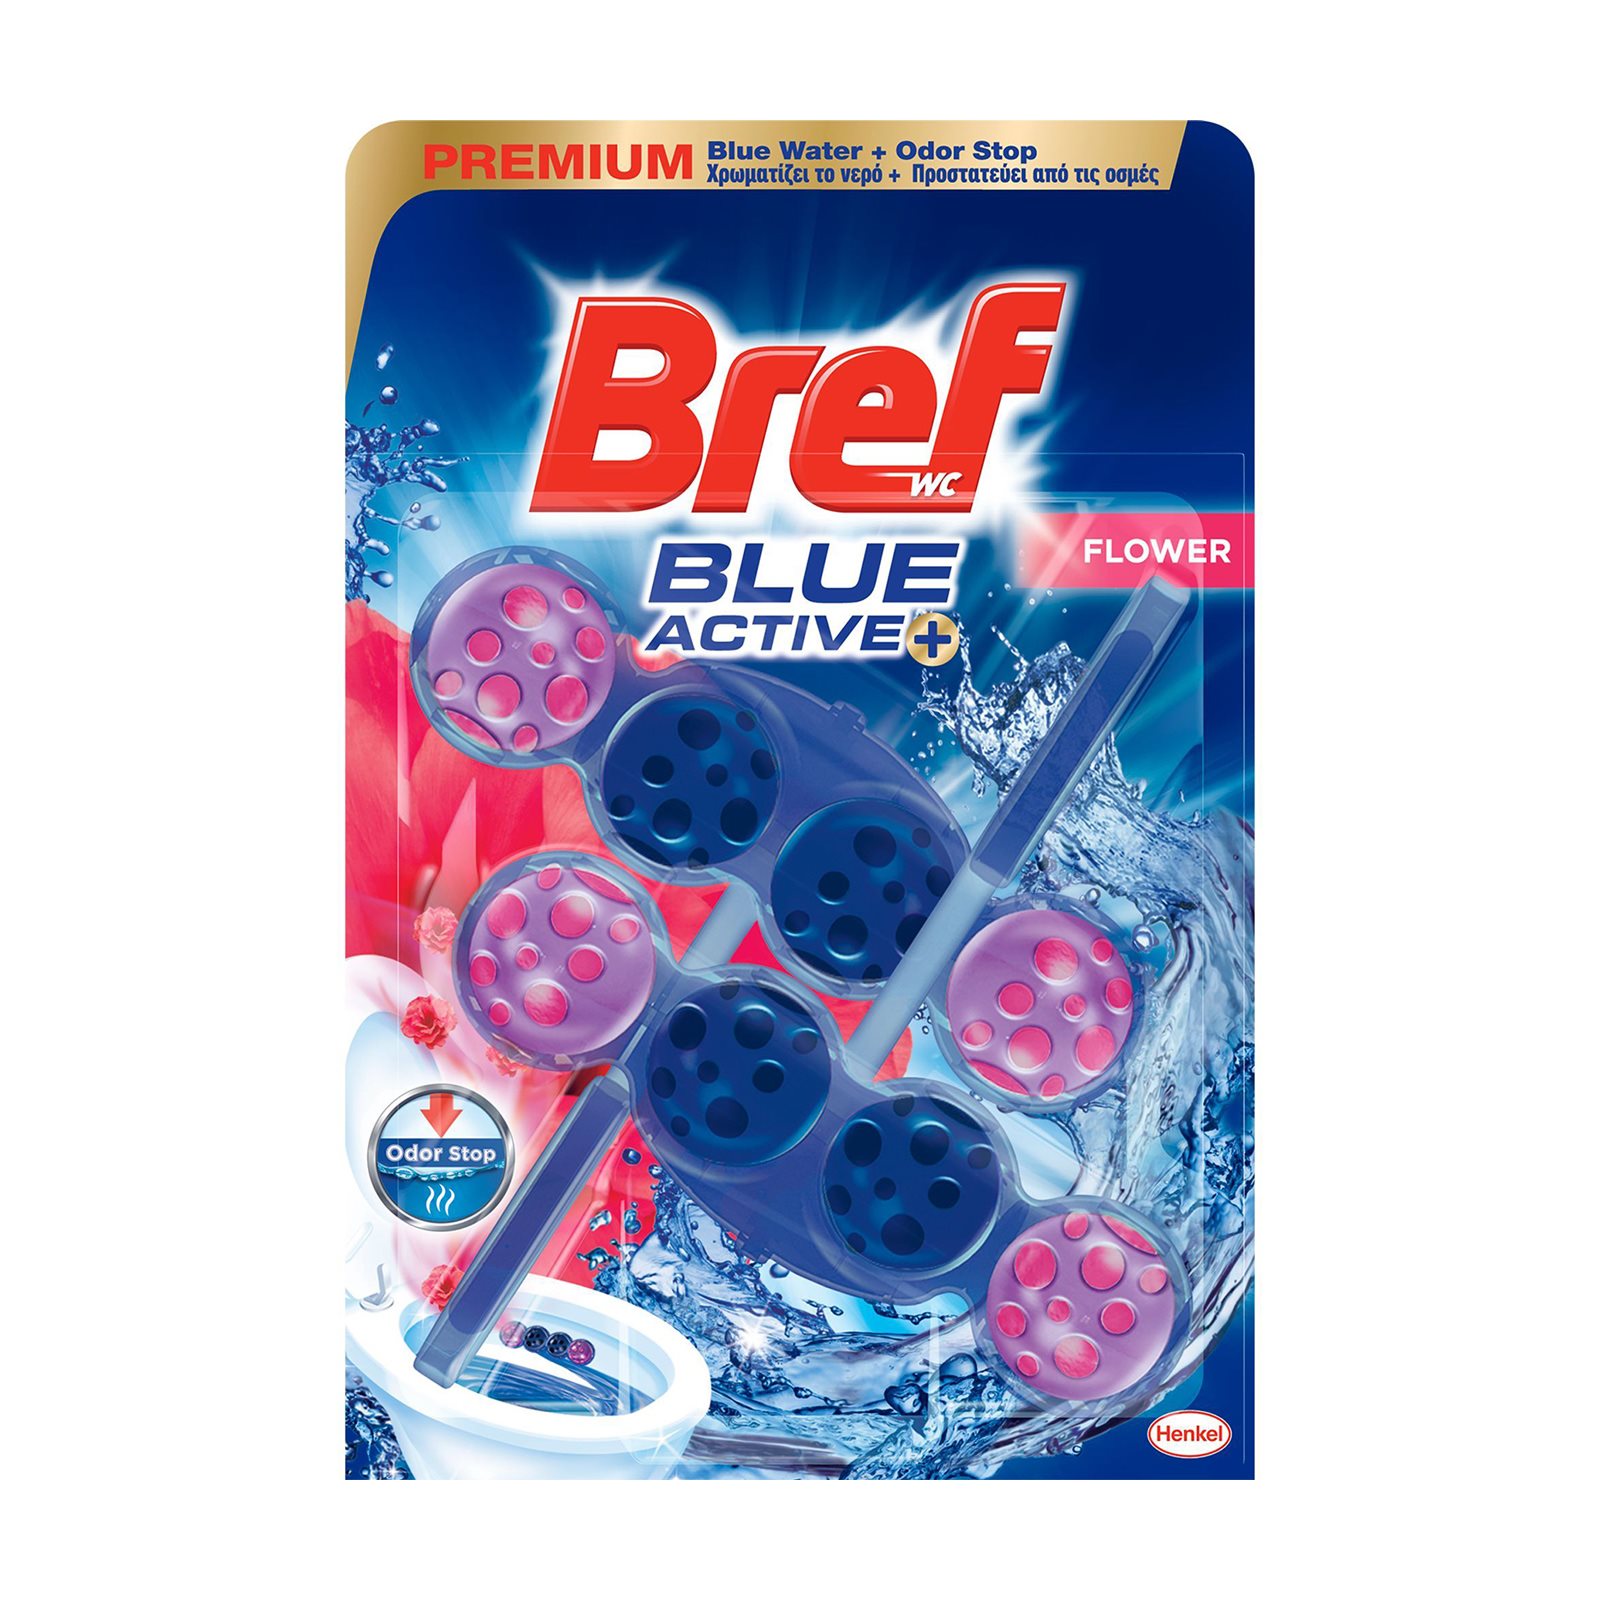 BREF Wc Blue Active+ Στερεό Μπλοκ Τουαλέτας Flower 2x50gr